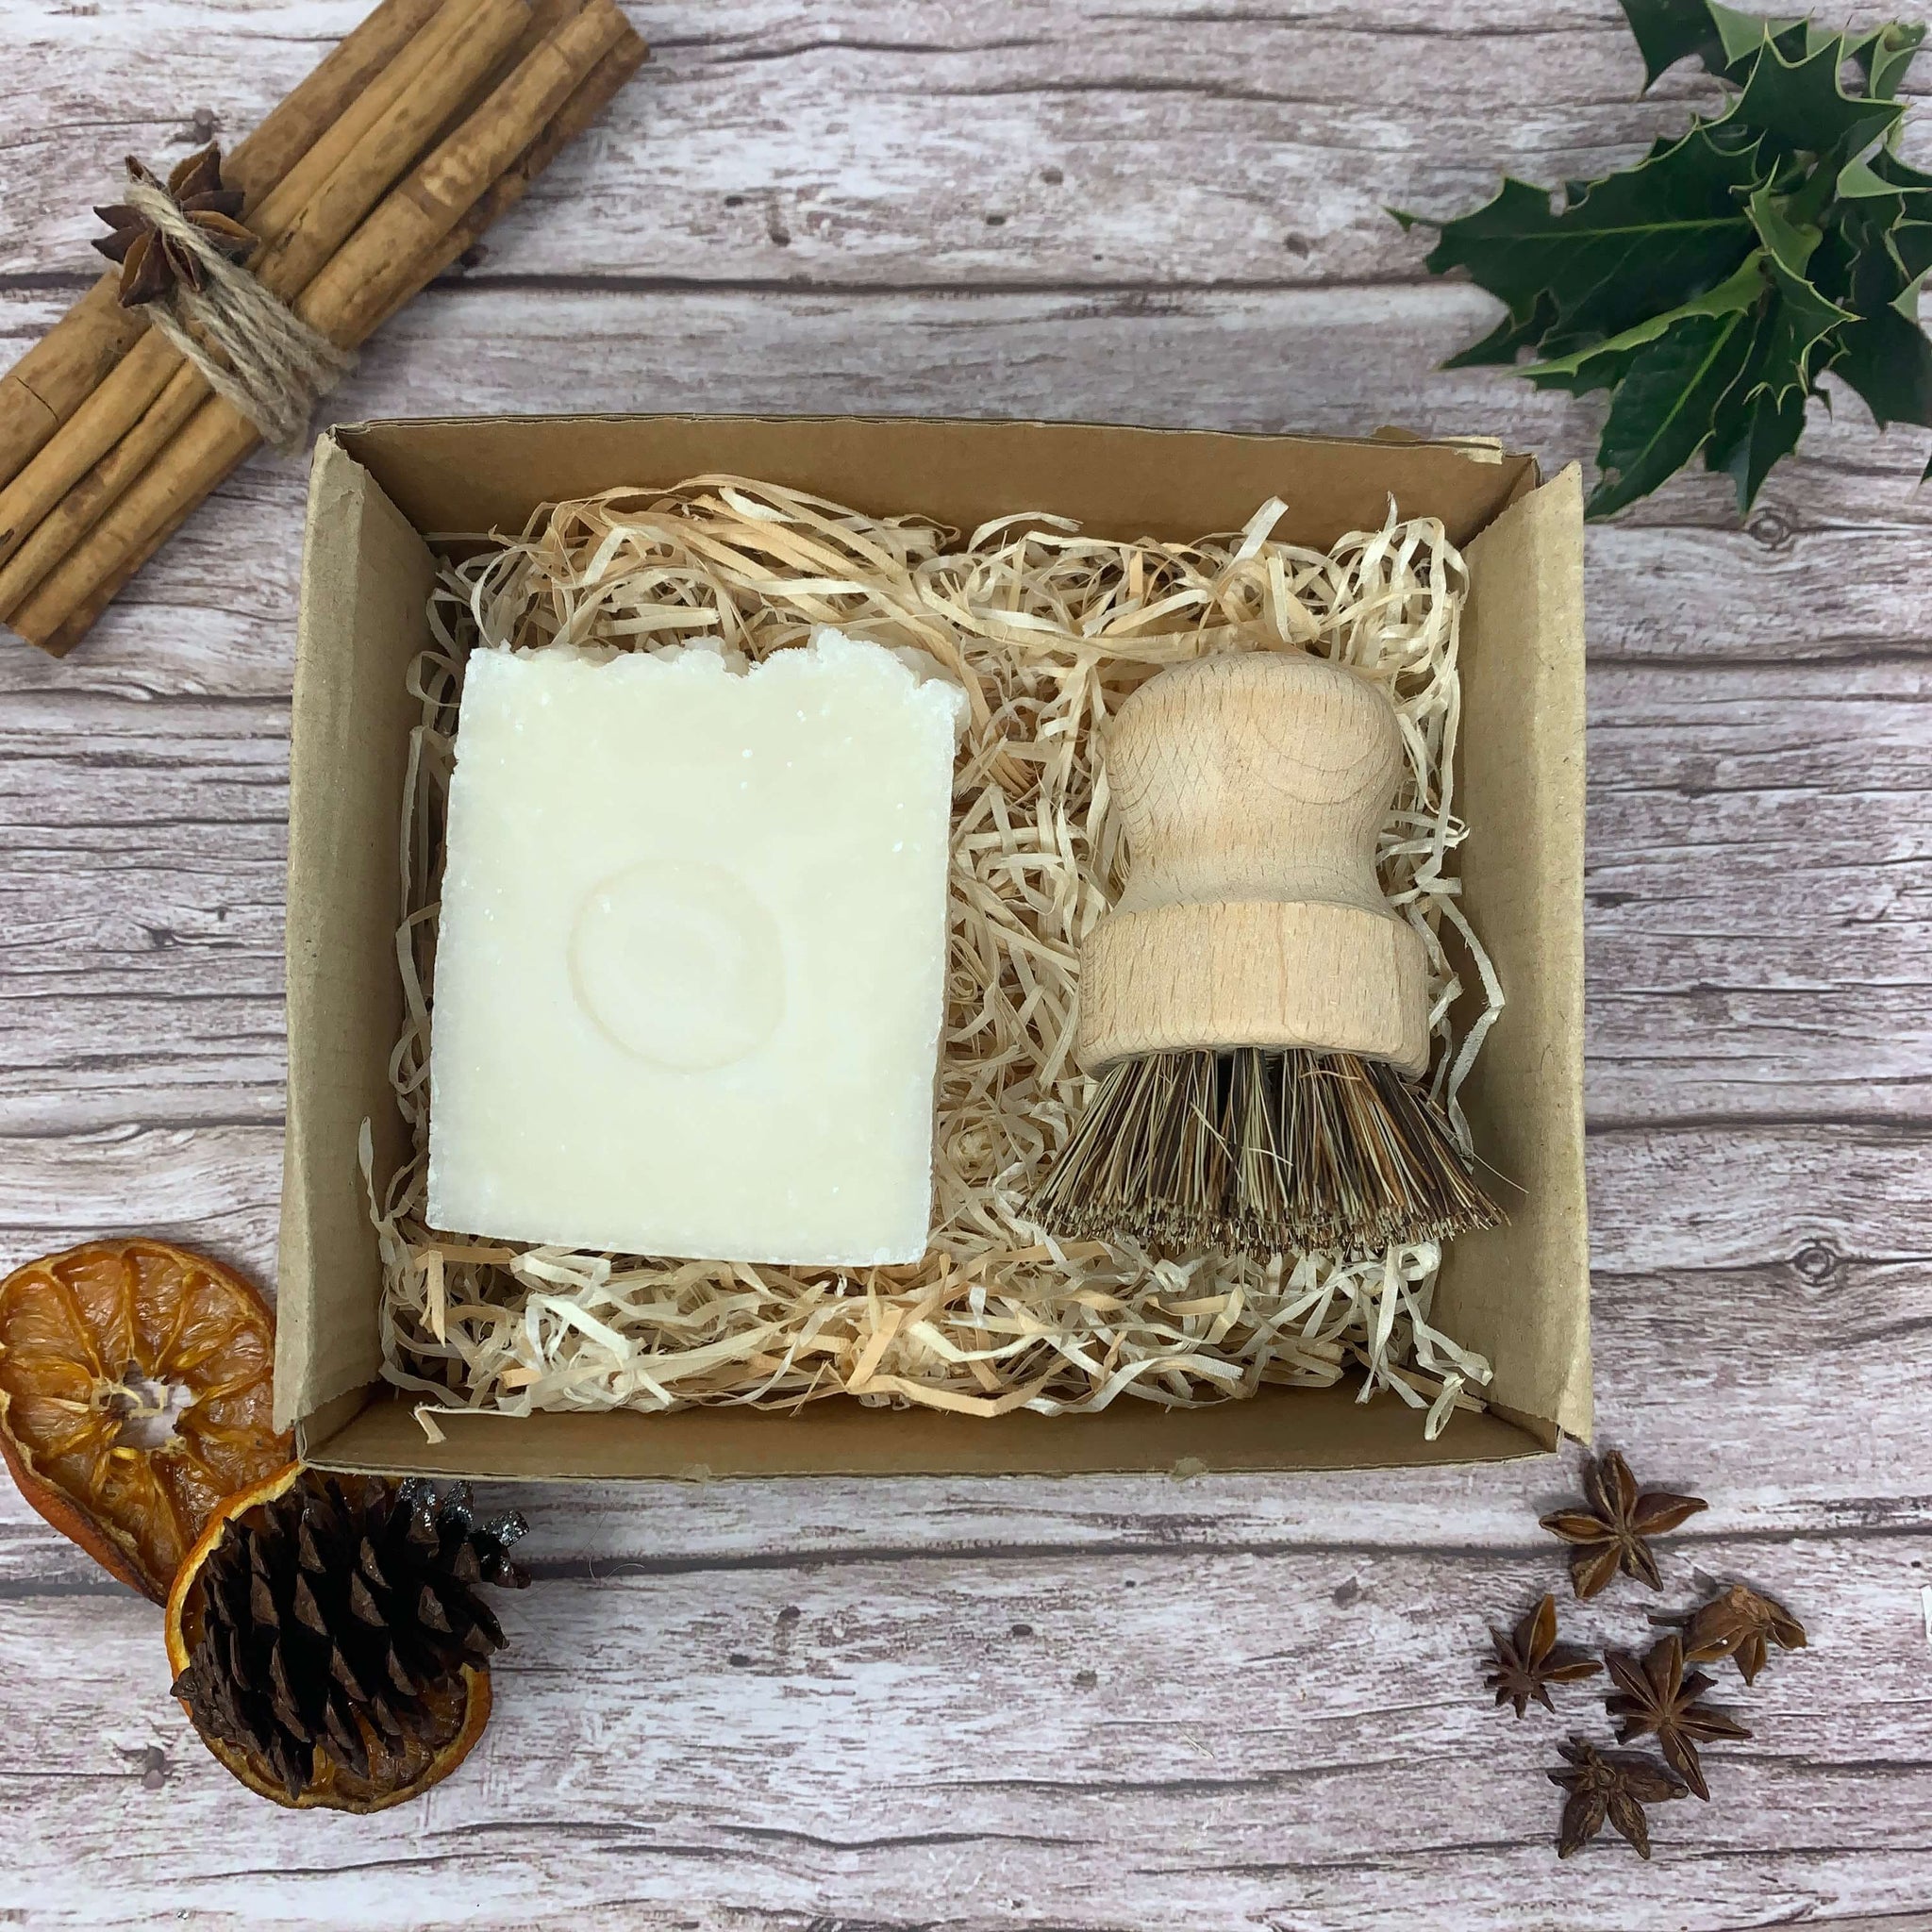 Kitchen Brush and Dish Soap Gift Set, EarthBits